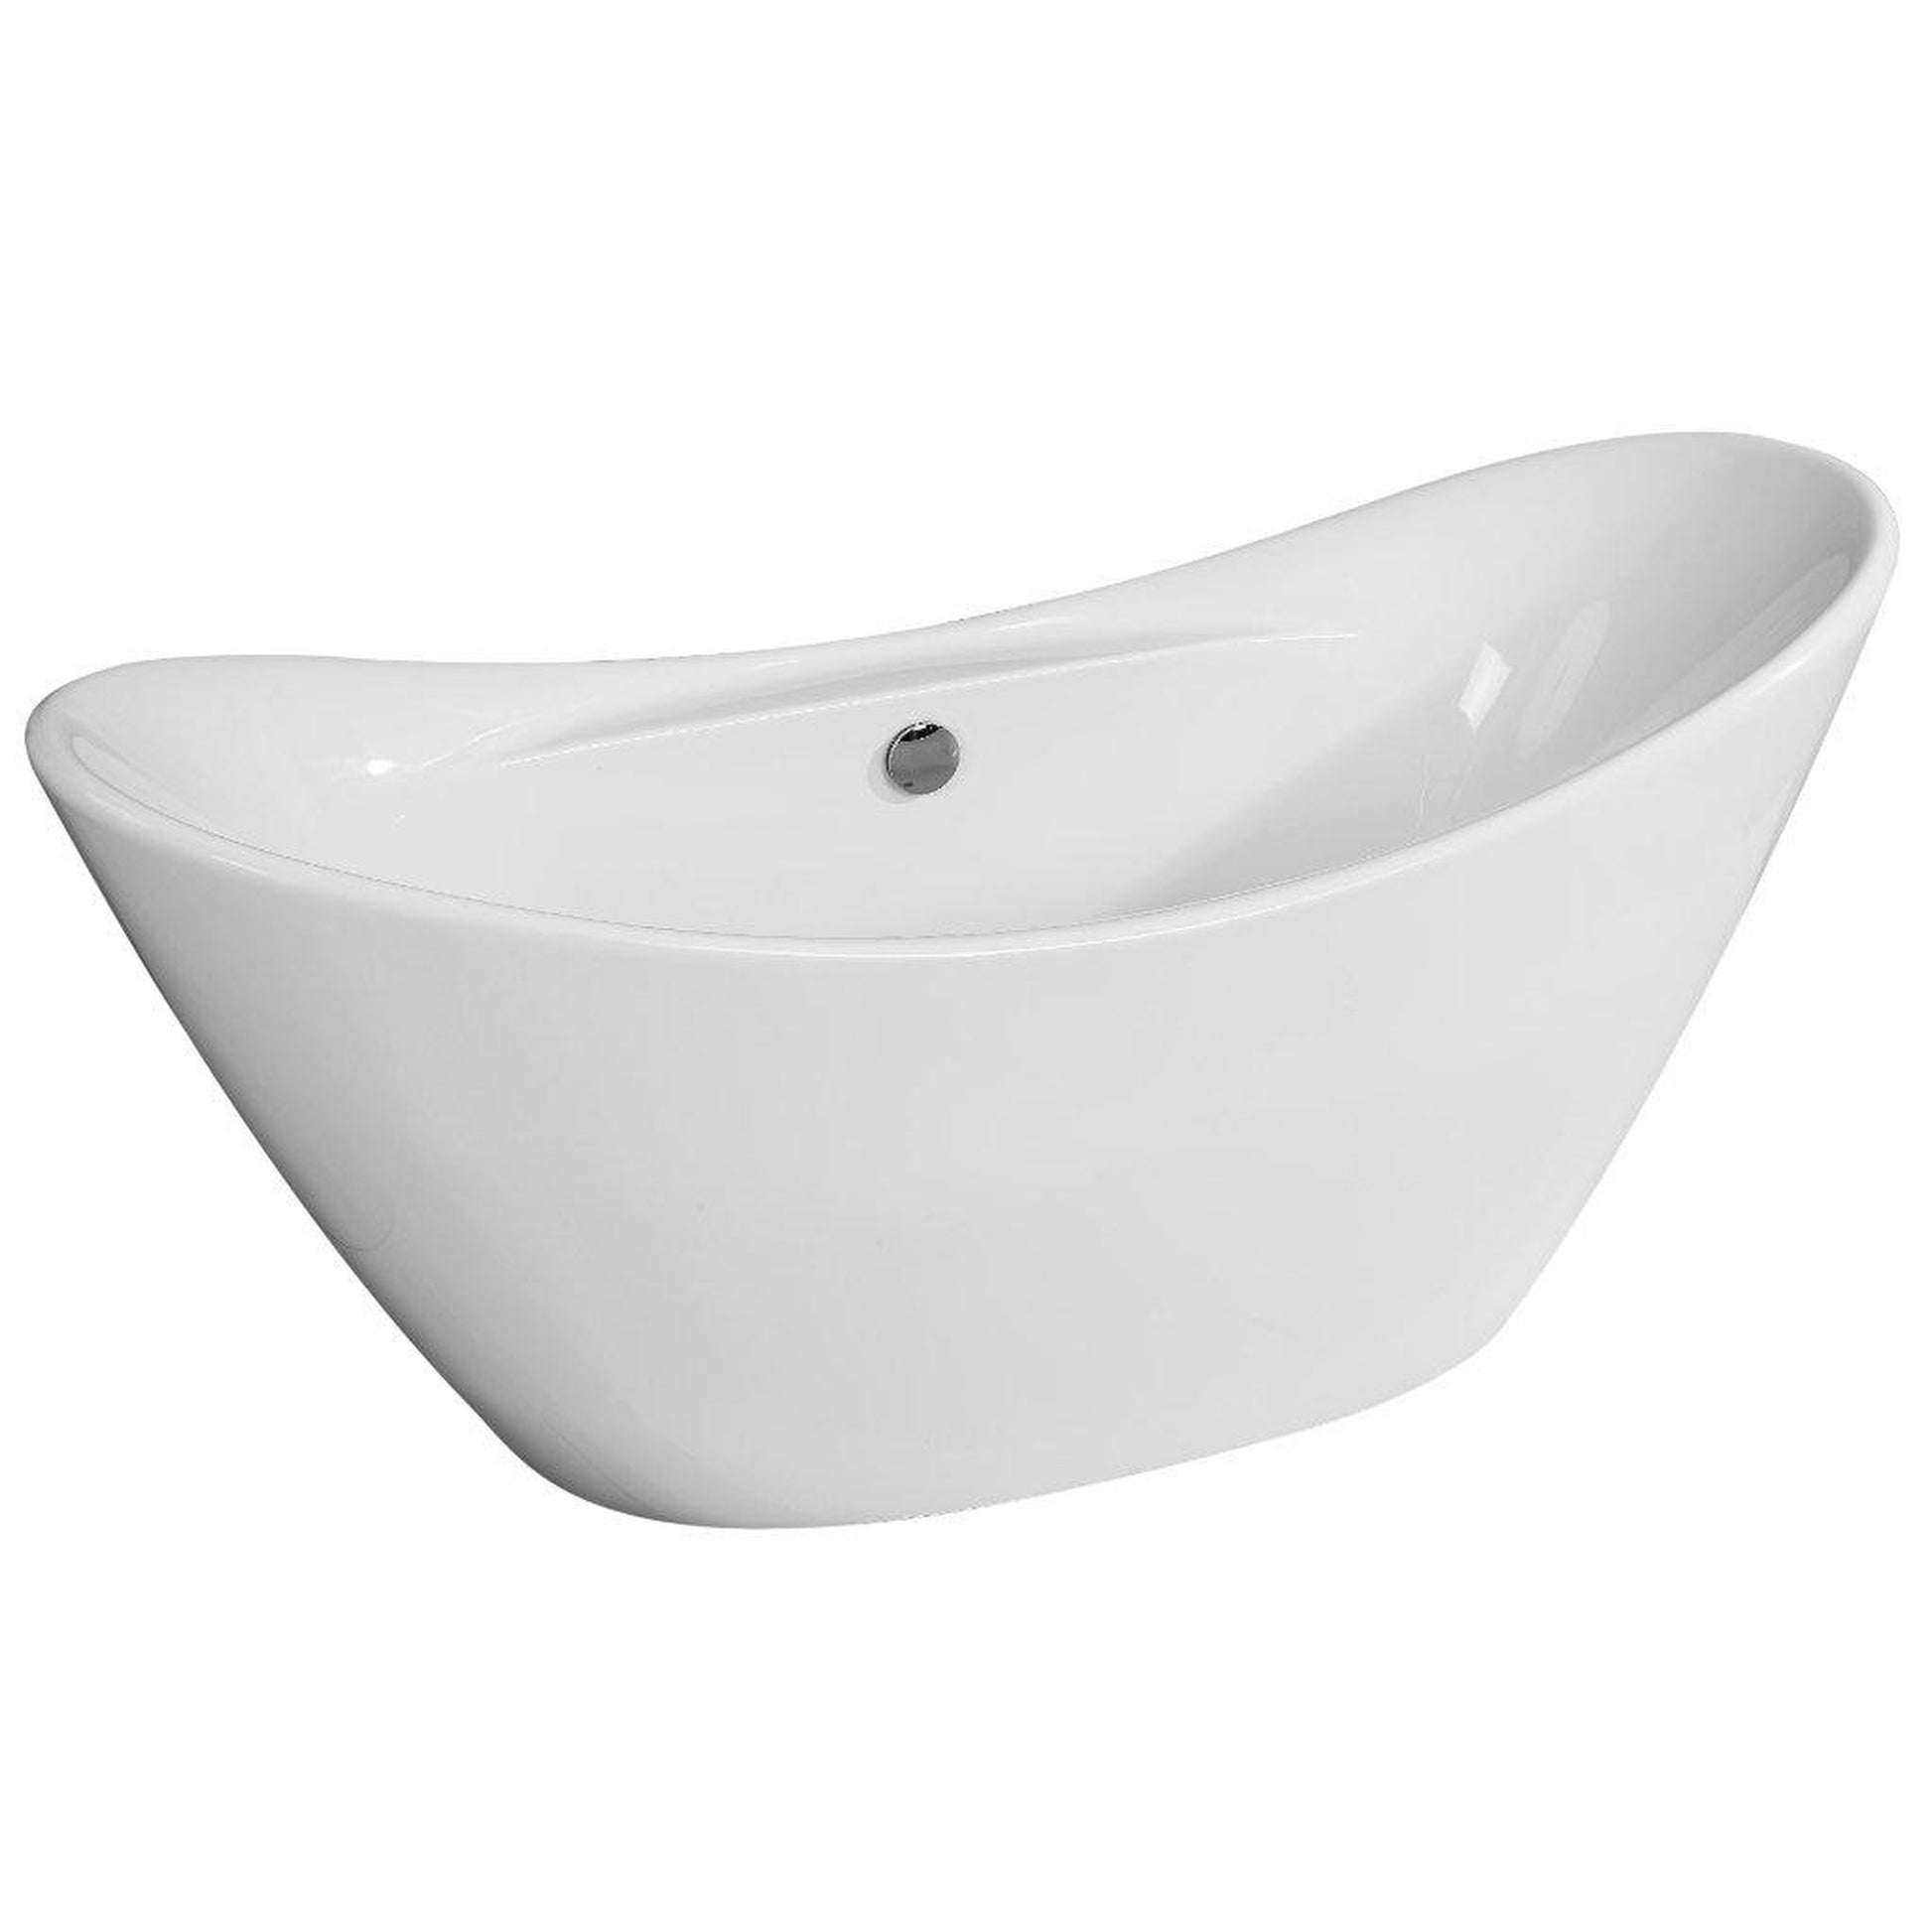 ALFI Brand AB8803 68" One Person Freestanding White Oval Acrylic Soaking Bathtub